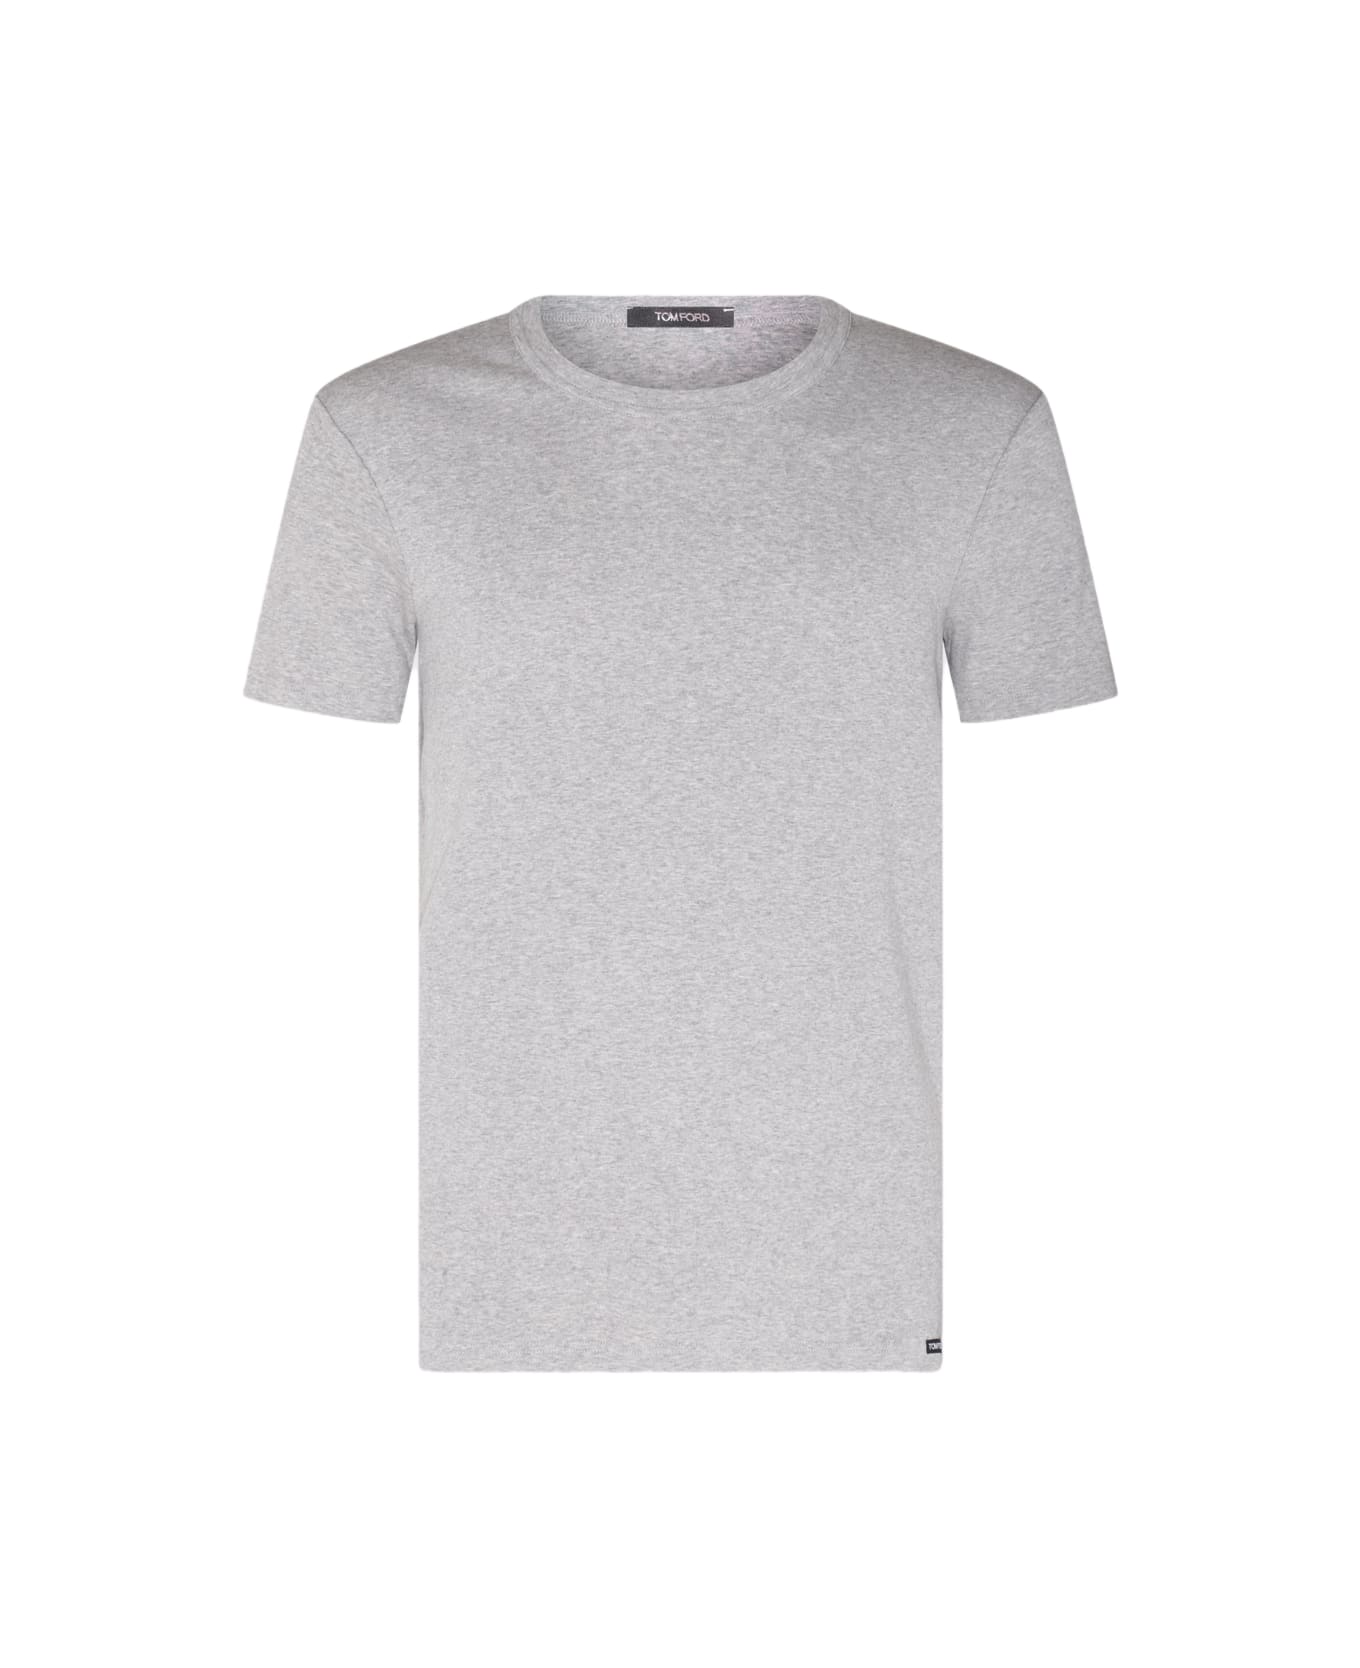 Tom Ford Grey Corridor Blend T-shirt - Grey